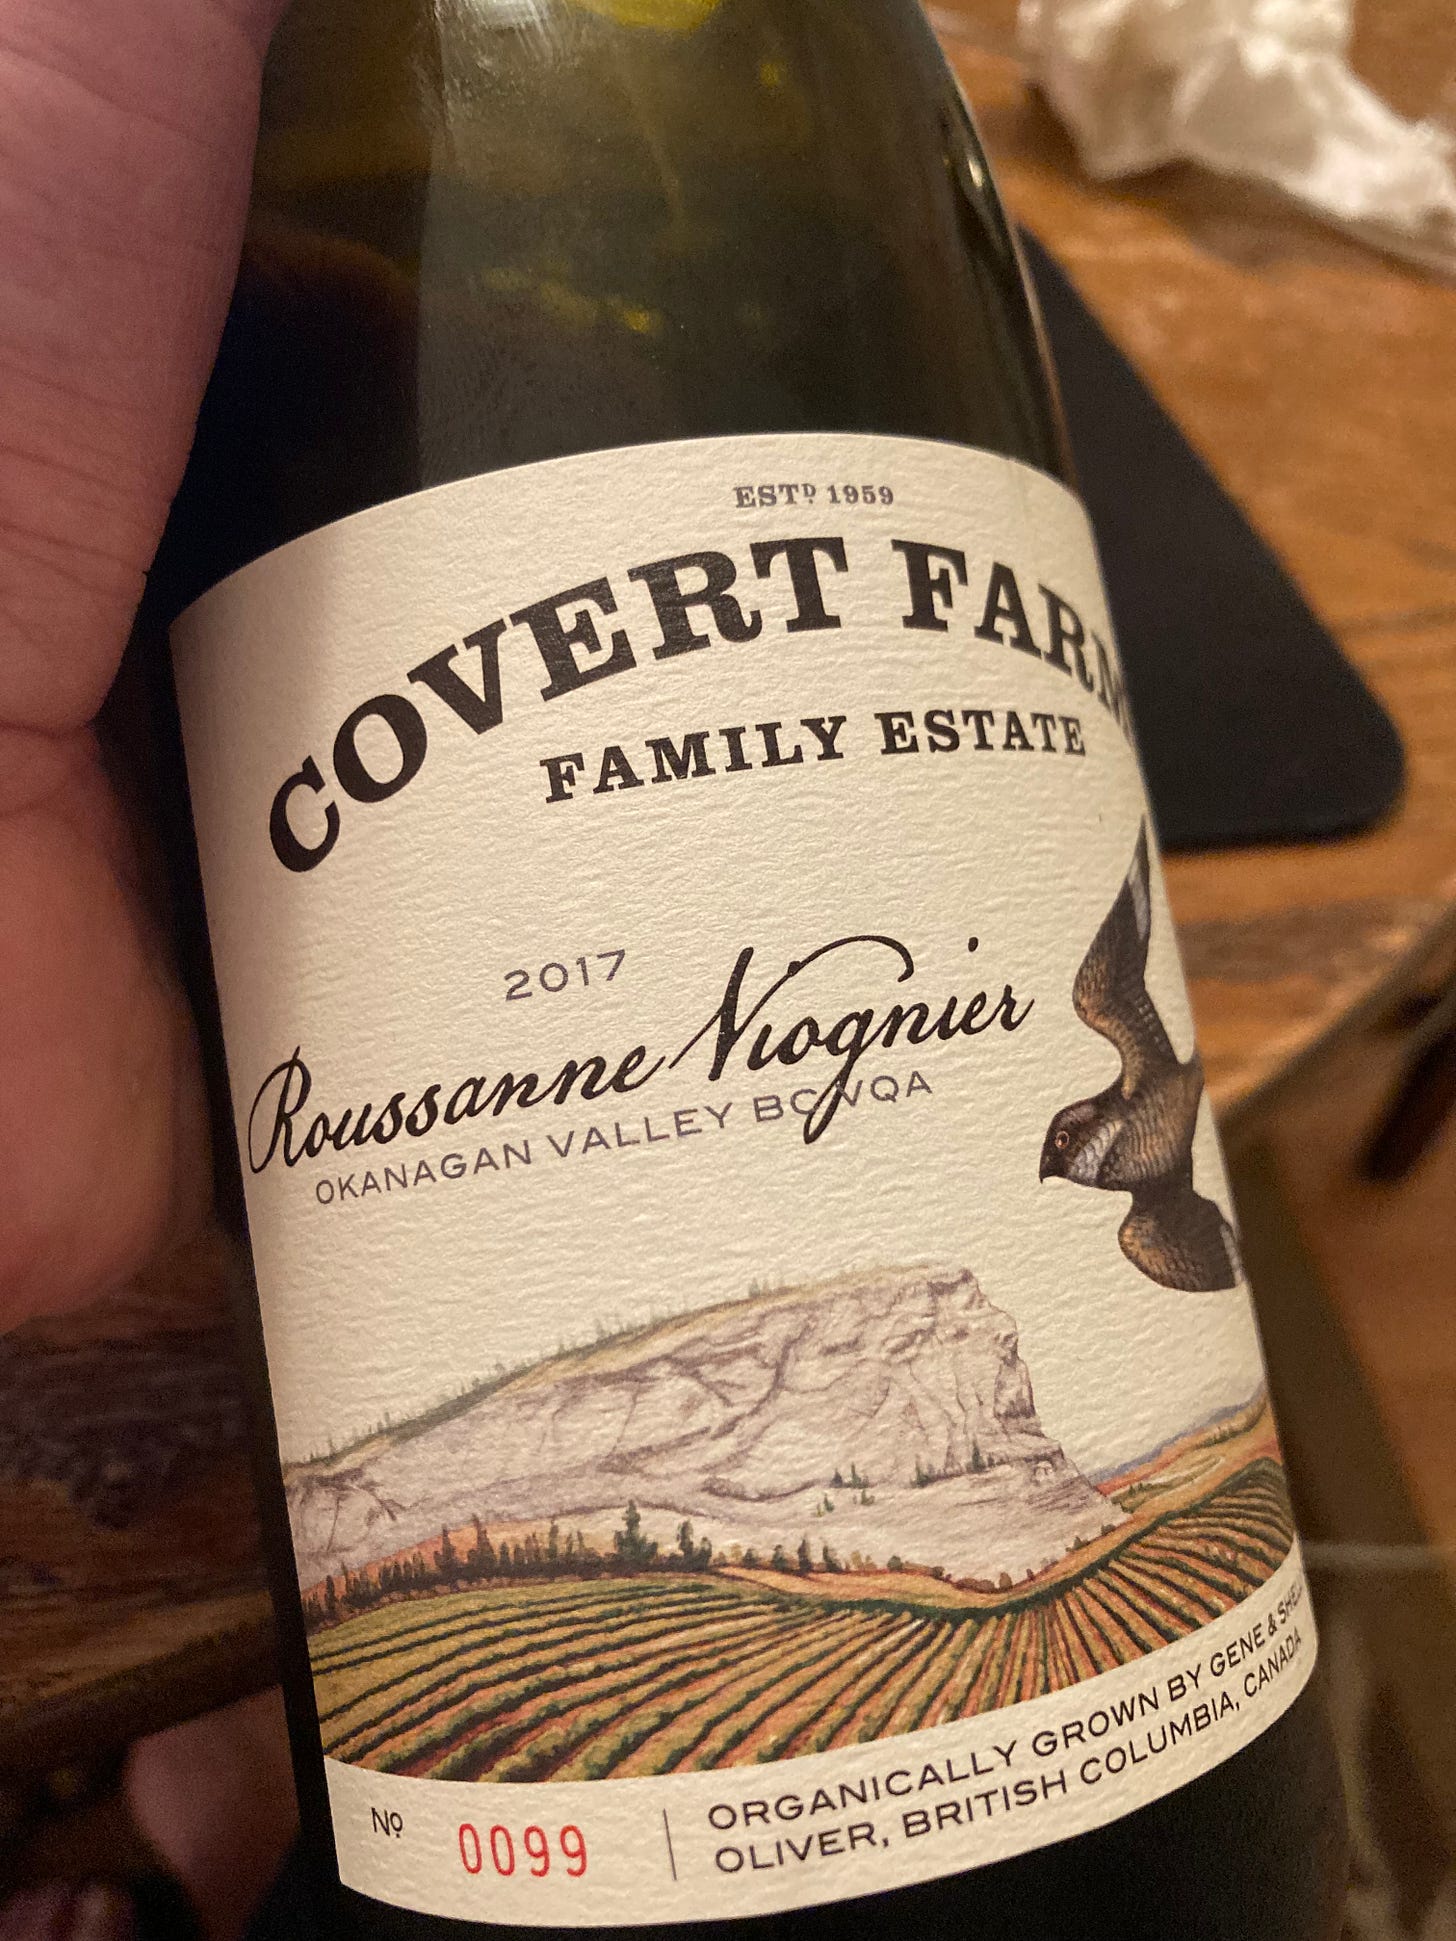 The front label of a bottle of Covert Farms 2017 Rousanne Viognier